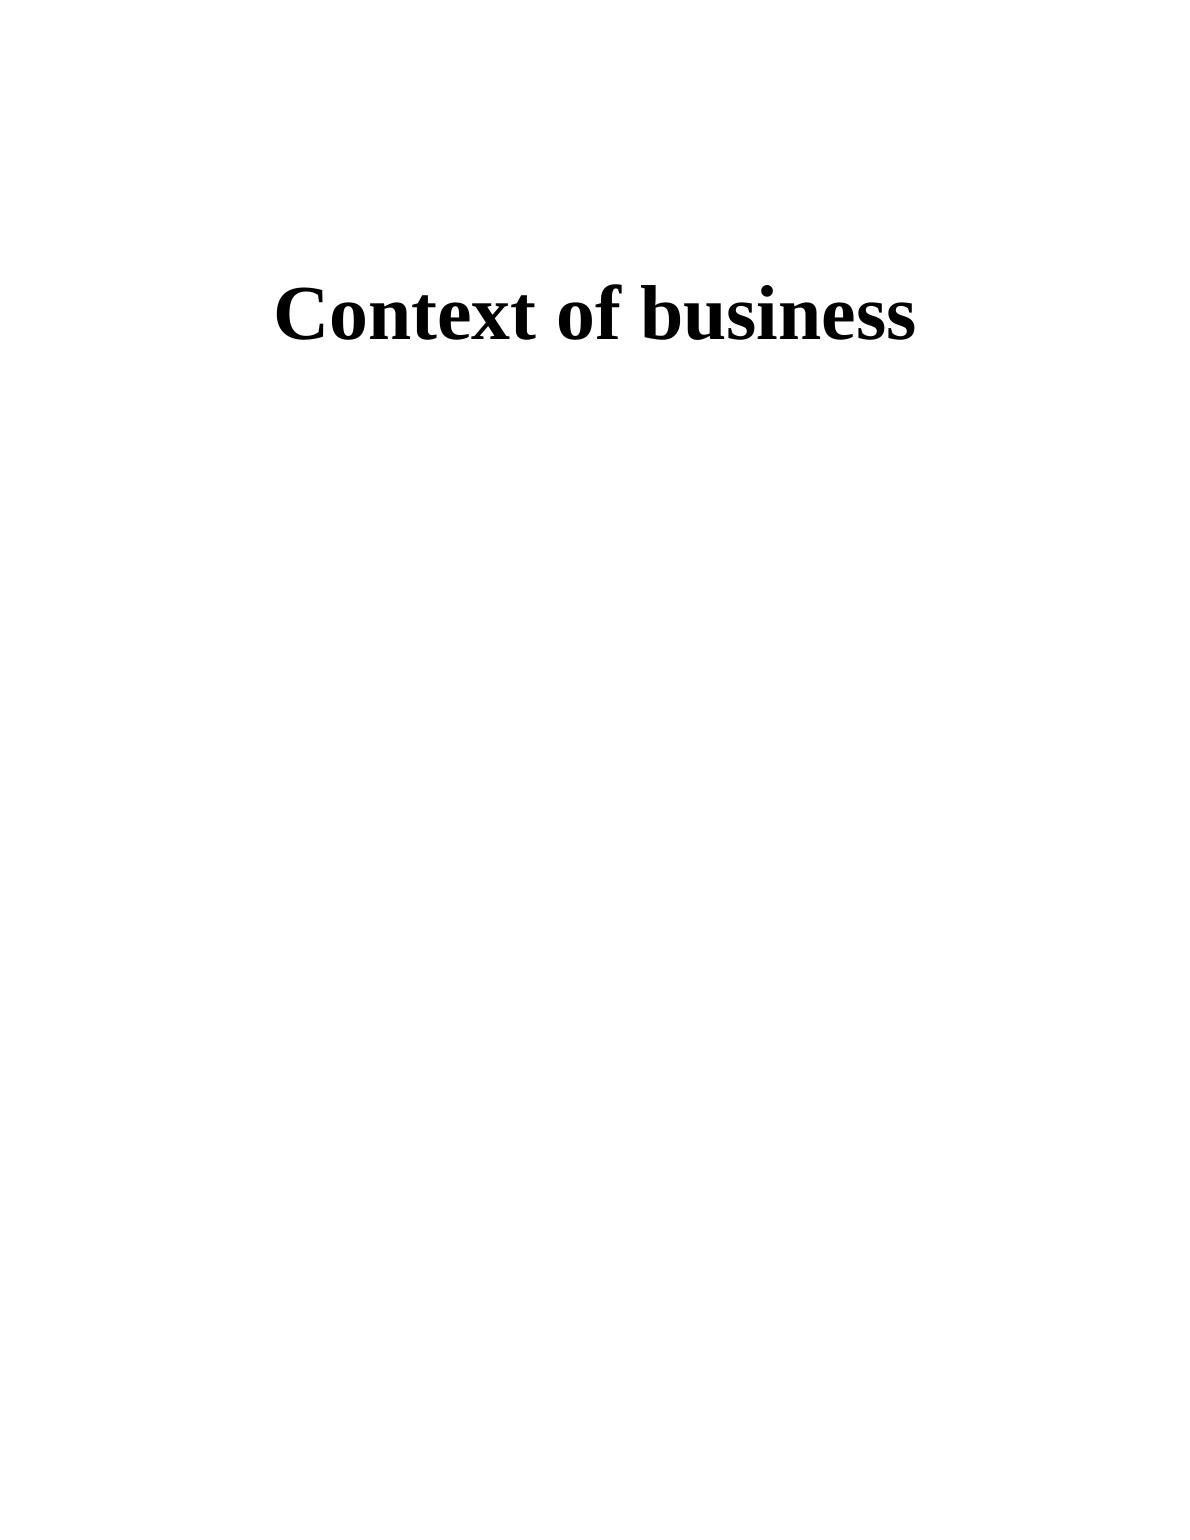 Context of Business - Tesco Plc_1